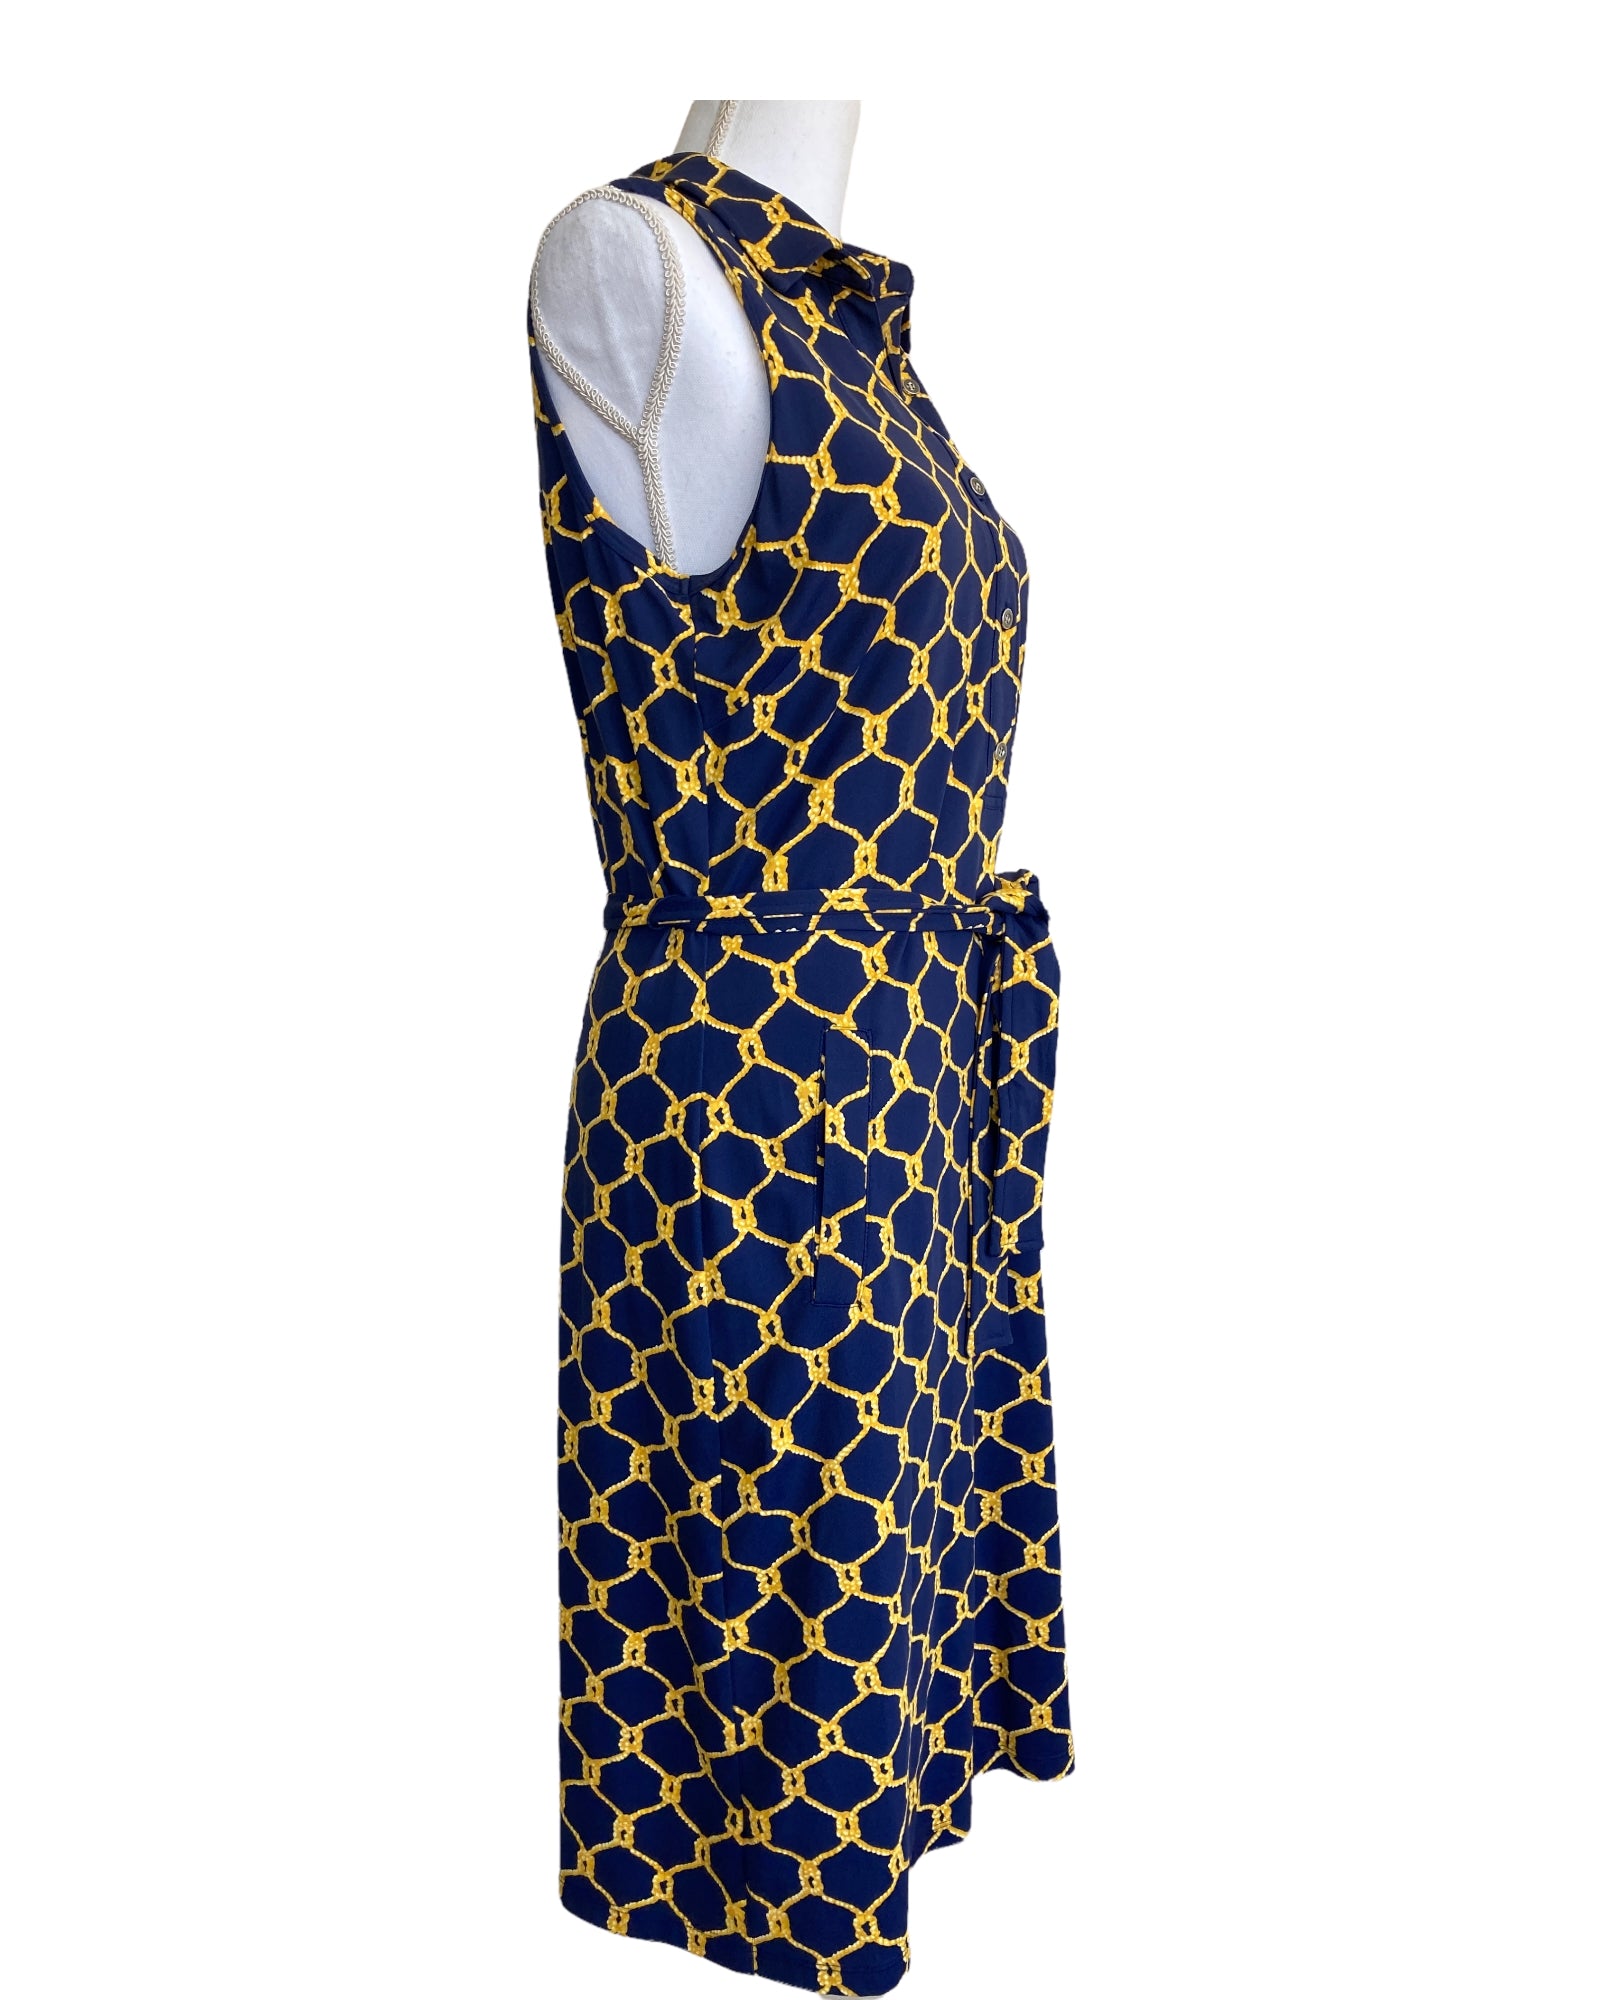 J. McLaughlin Navy Gold Rope Pattern Sleeveless Dress, L